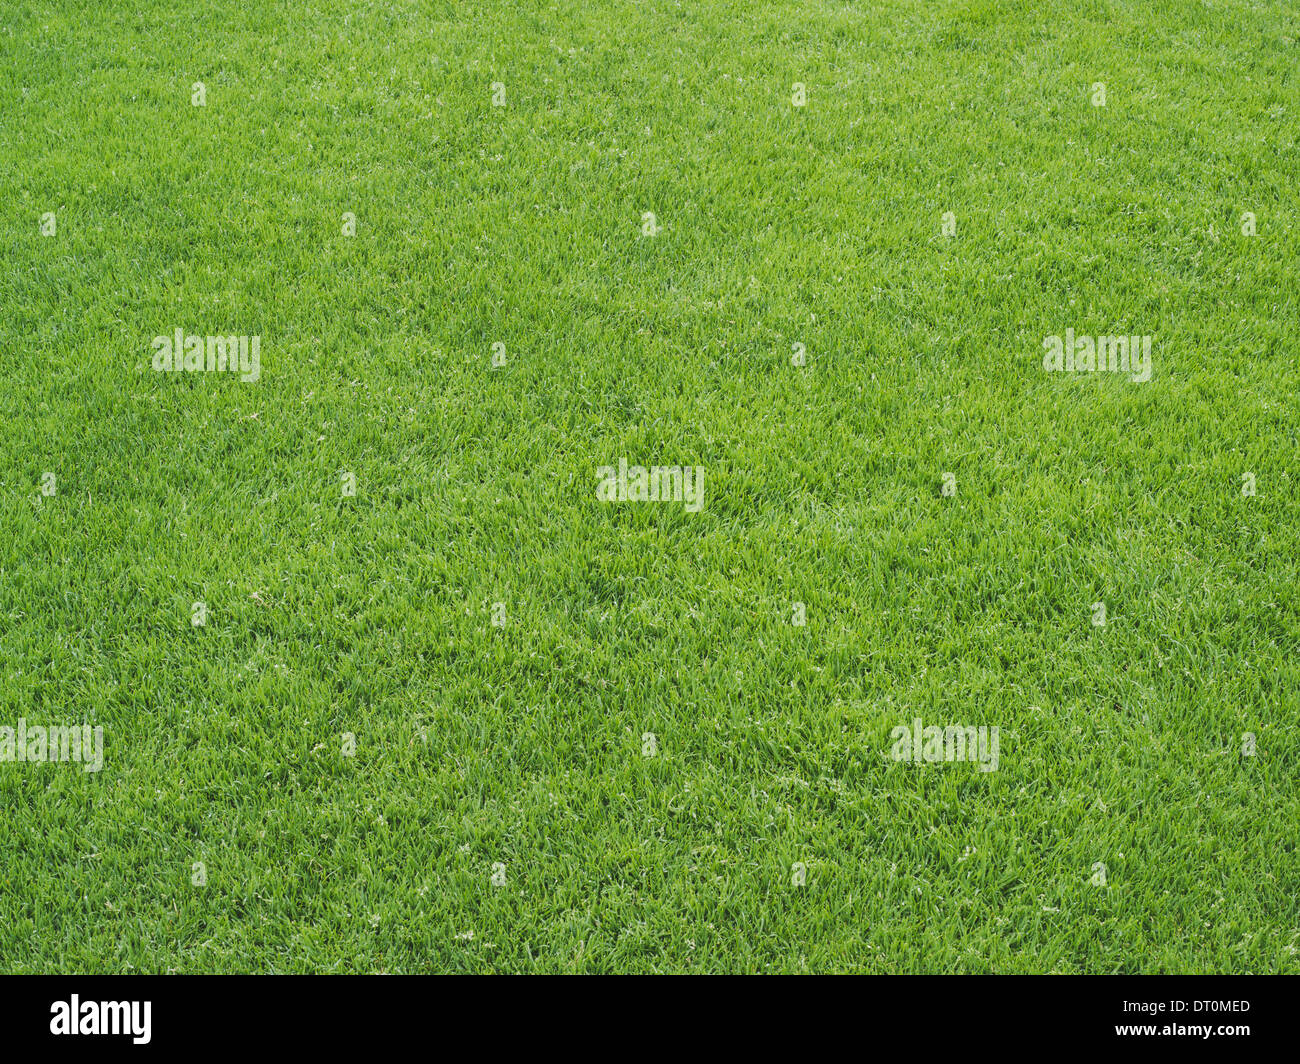 Washington USA grüne Rasenfläche auf einem Leichtathletik-Sportplatz Stockfoto